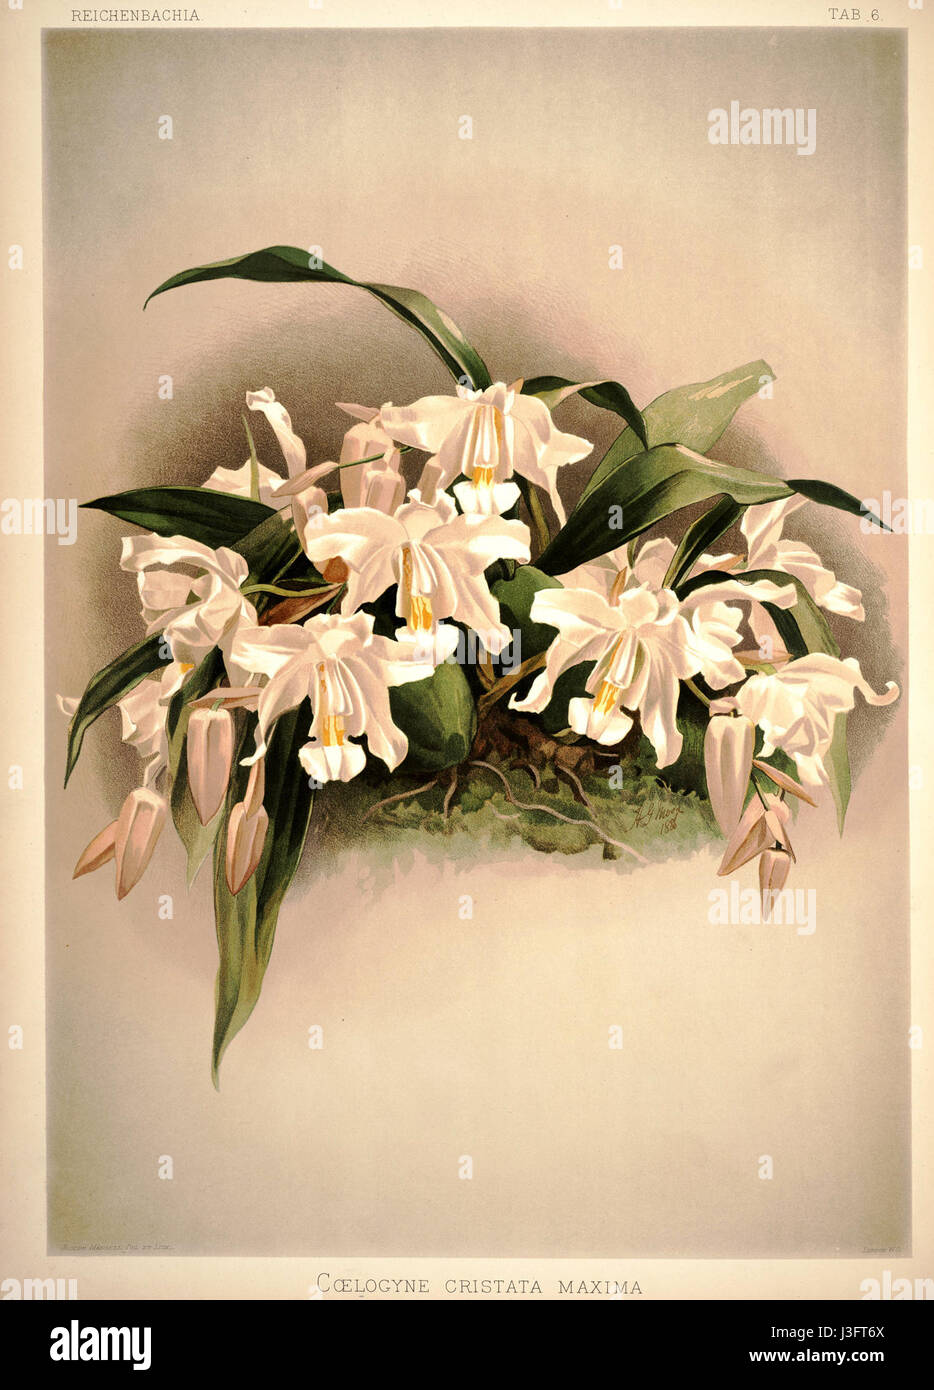 Frederick Sander   Reichenbachia I plate 06 (1888)   Coelogyne cristata maxima Stock Photo